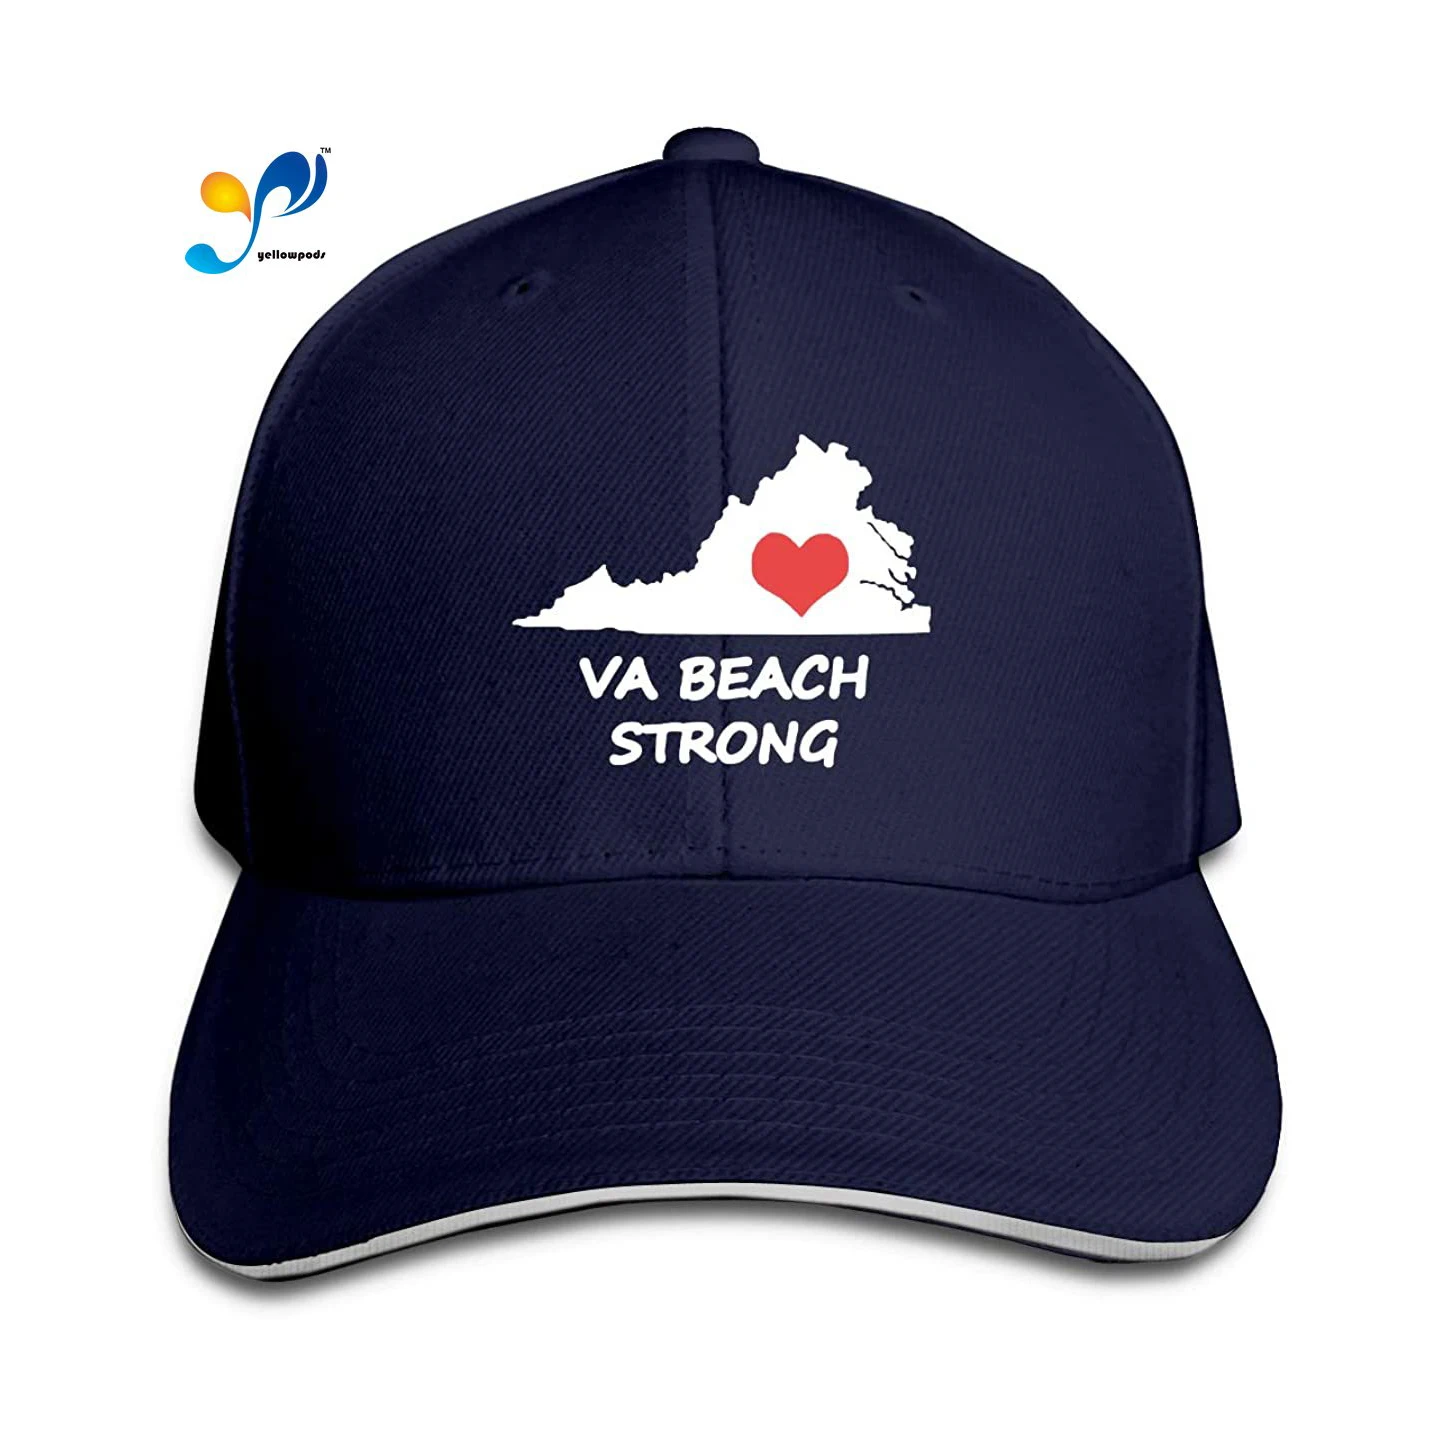 

DALIAAG Virginia Beach VA Strong Men's Girl's Classical Hat Fashionable Peak Cap Cricket Cap Moto Gp Baseball Cap